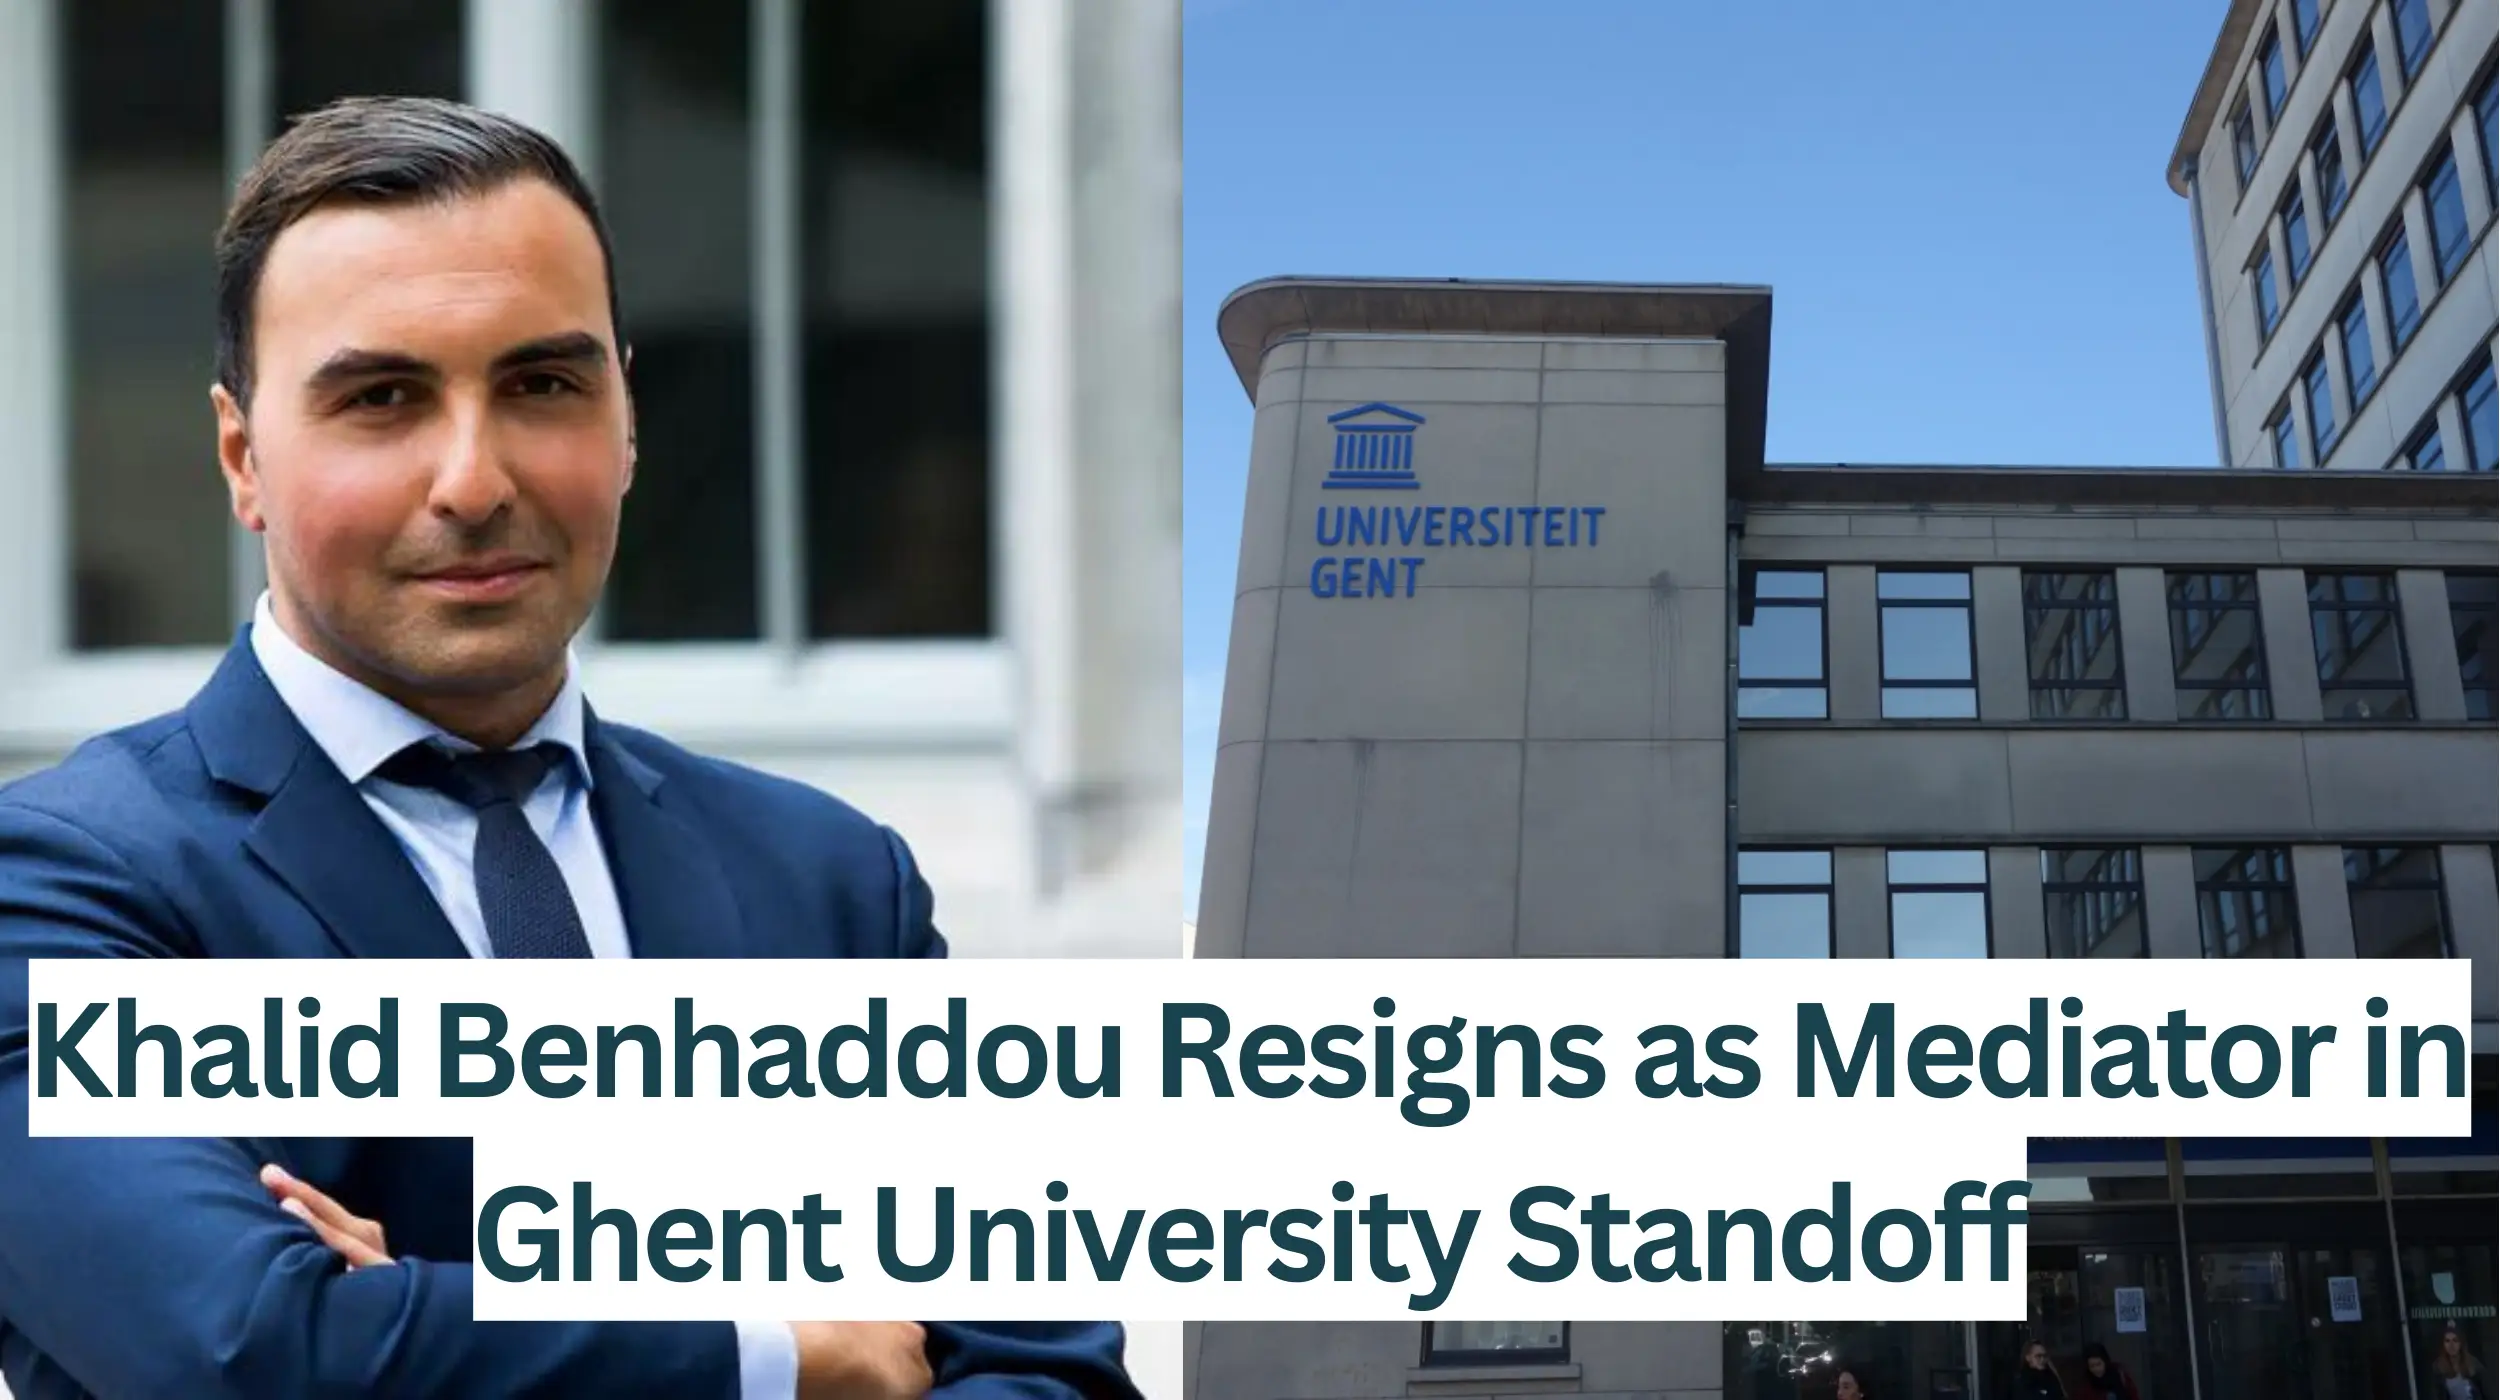 Khalid-Benhaddou-Resigns-as-Mediator-in-Ghent-University-Standoff